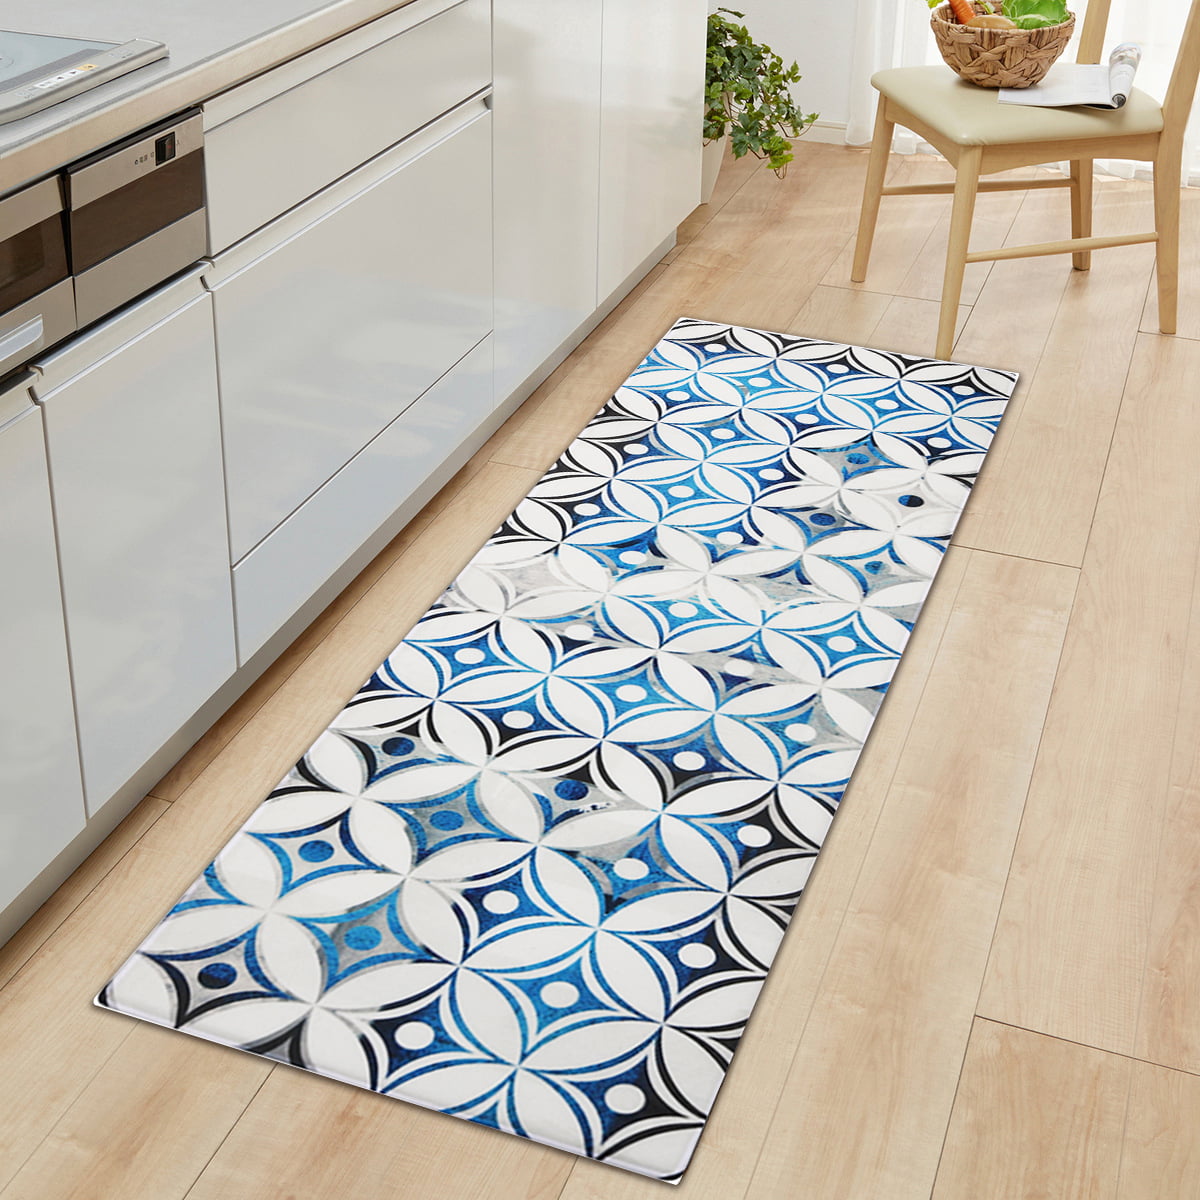 2PCS Kitchen Floor Mat Carpet Area Rug Non-Slip Bathroom Washable Doorma US 